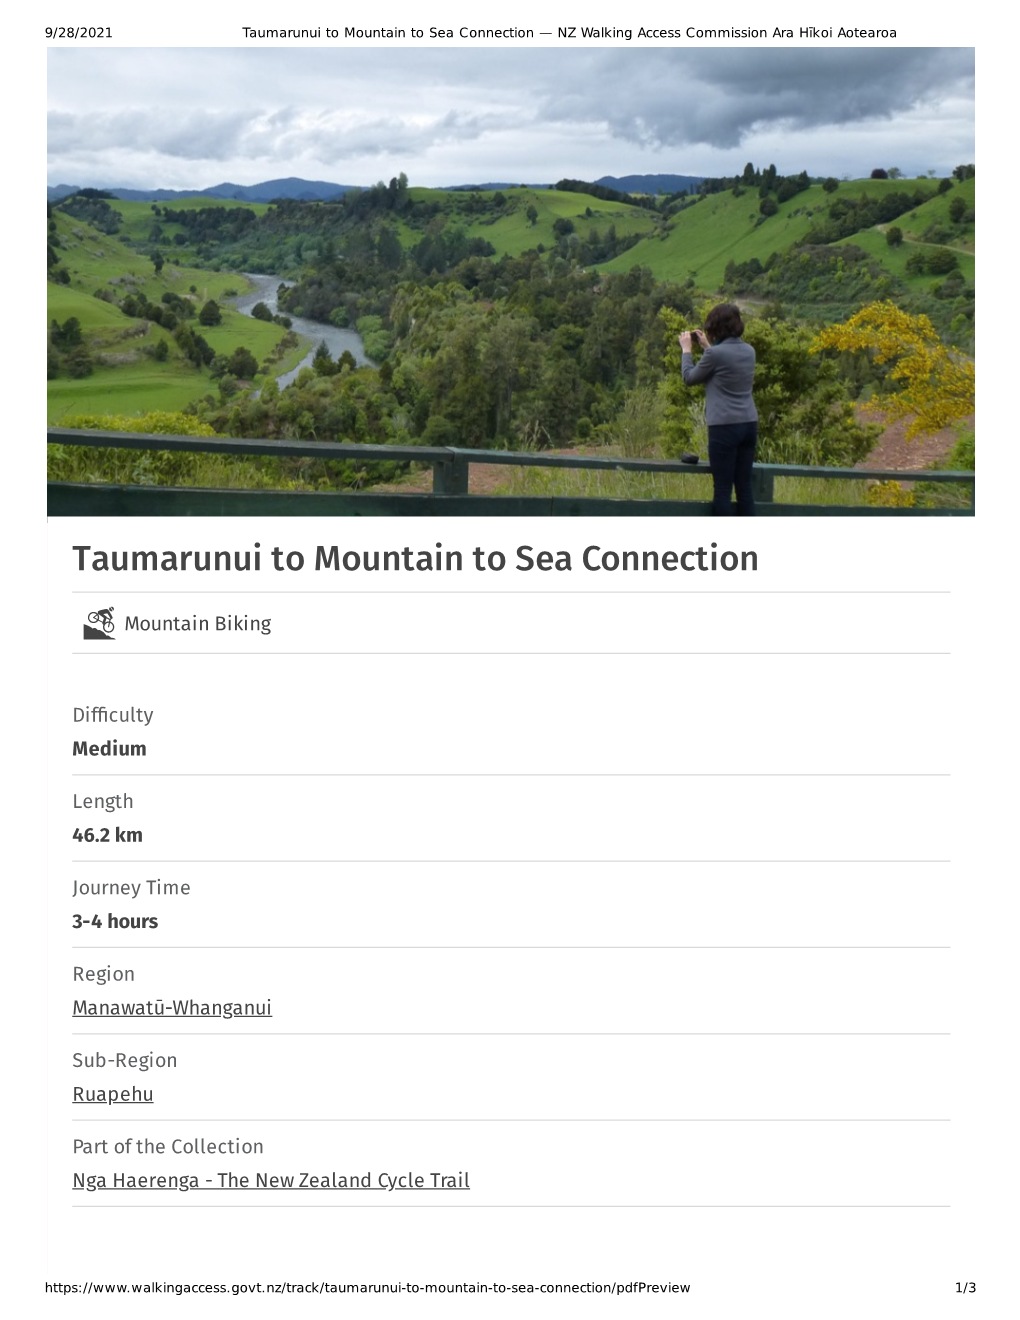 Taumarunui to Mountain to Sea Connection — NZ Walking Access Commission Ara Hīkoi Aotearoa